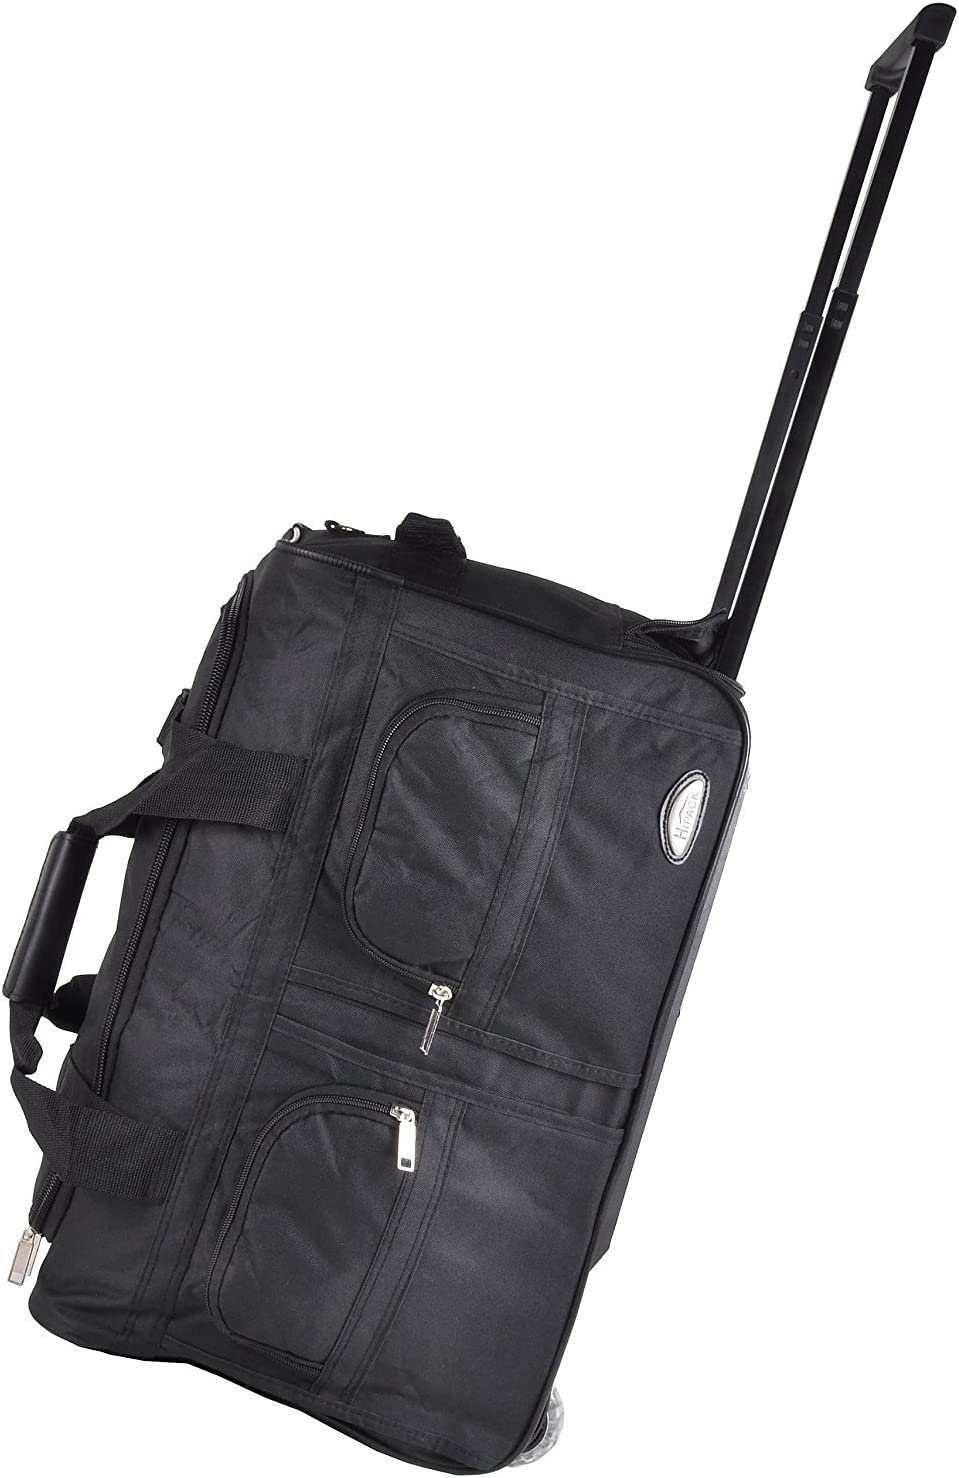 HiPack Rolling Duffel Bag 22 inch Black (PRD Black)